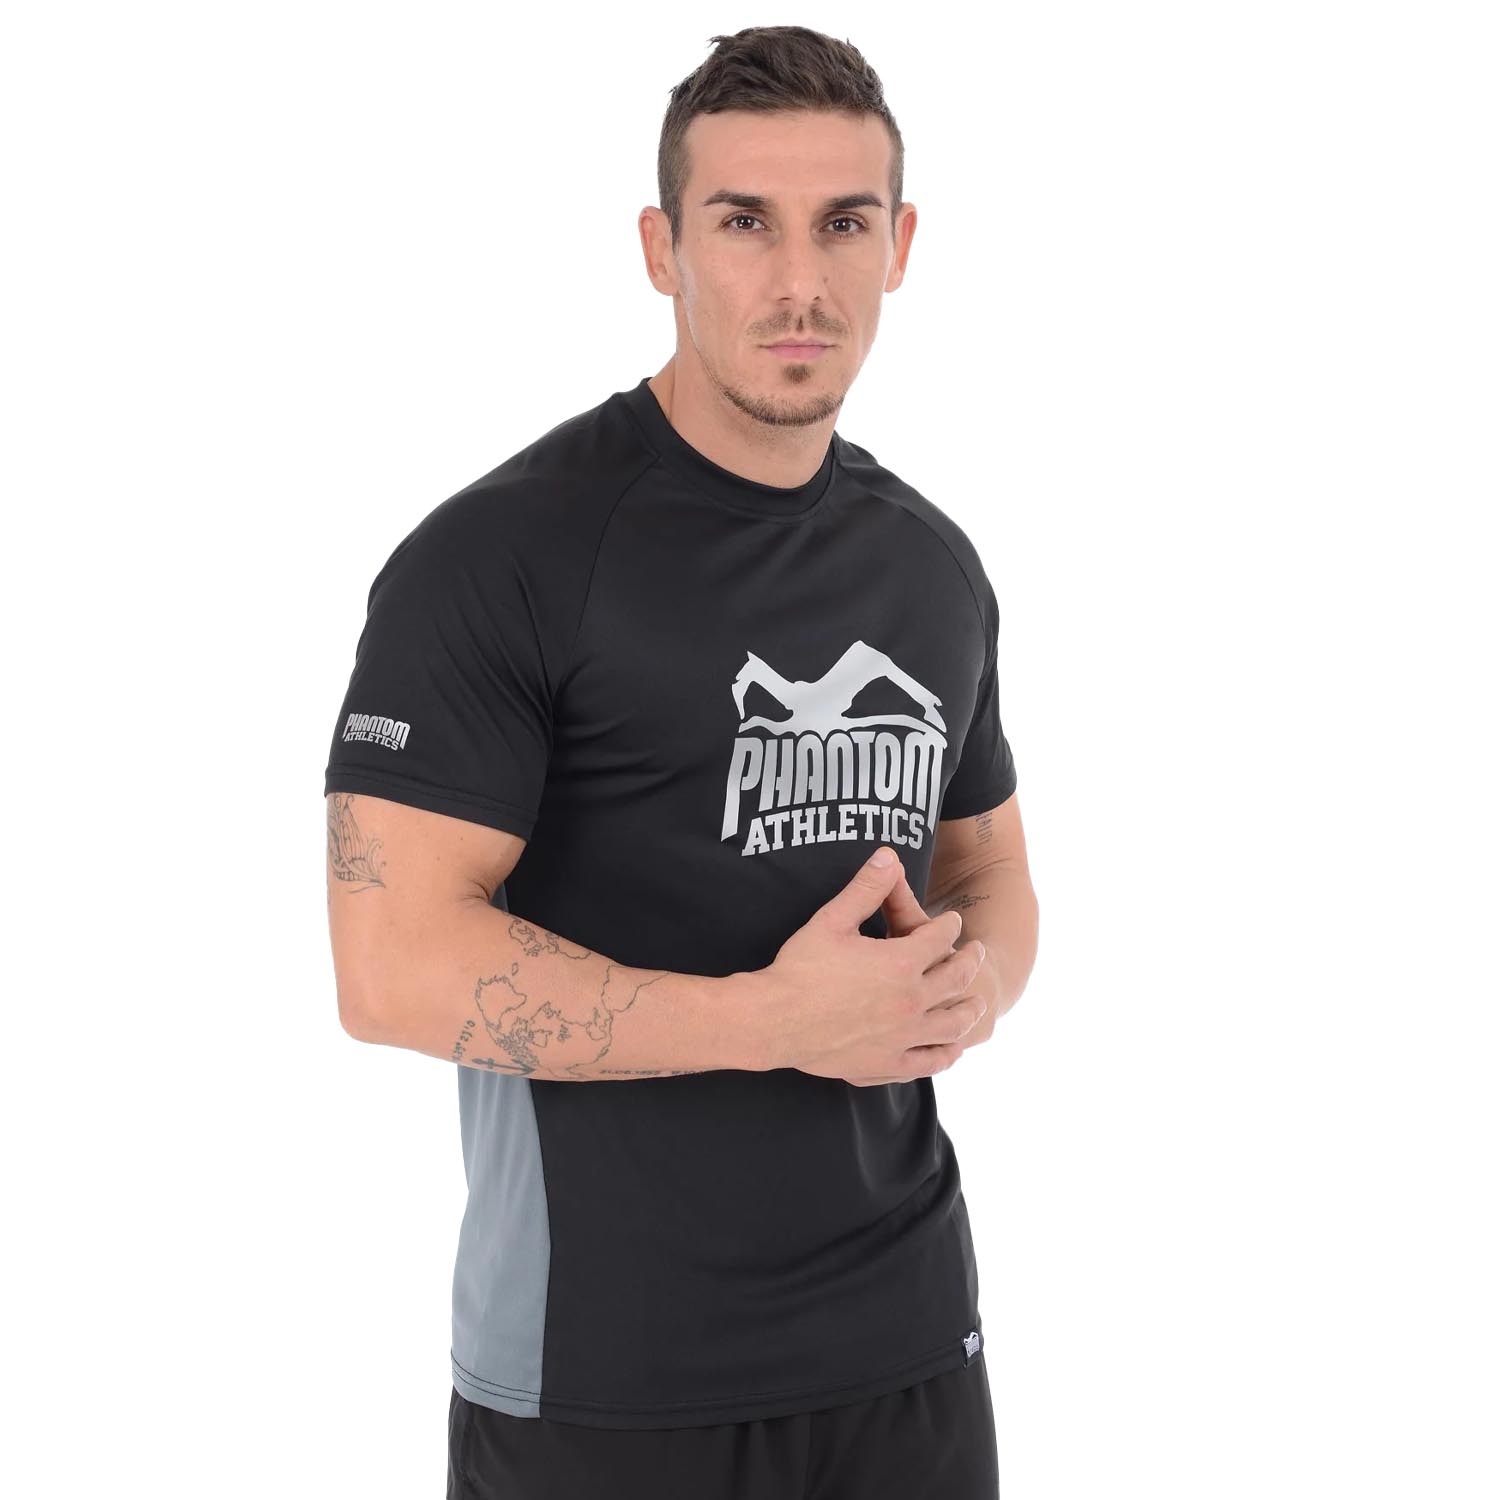 Phantom Athletics Fitness T-Shirt, Stealth, black, L